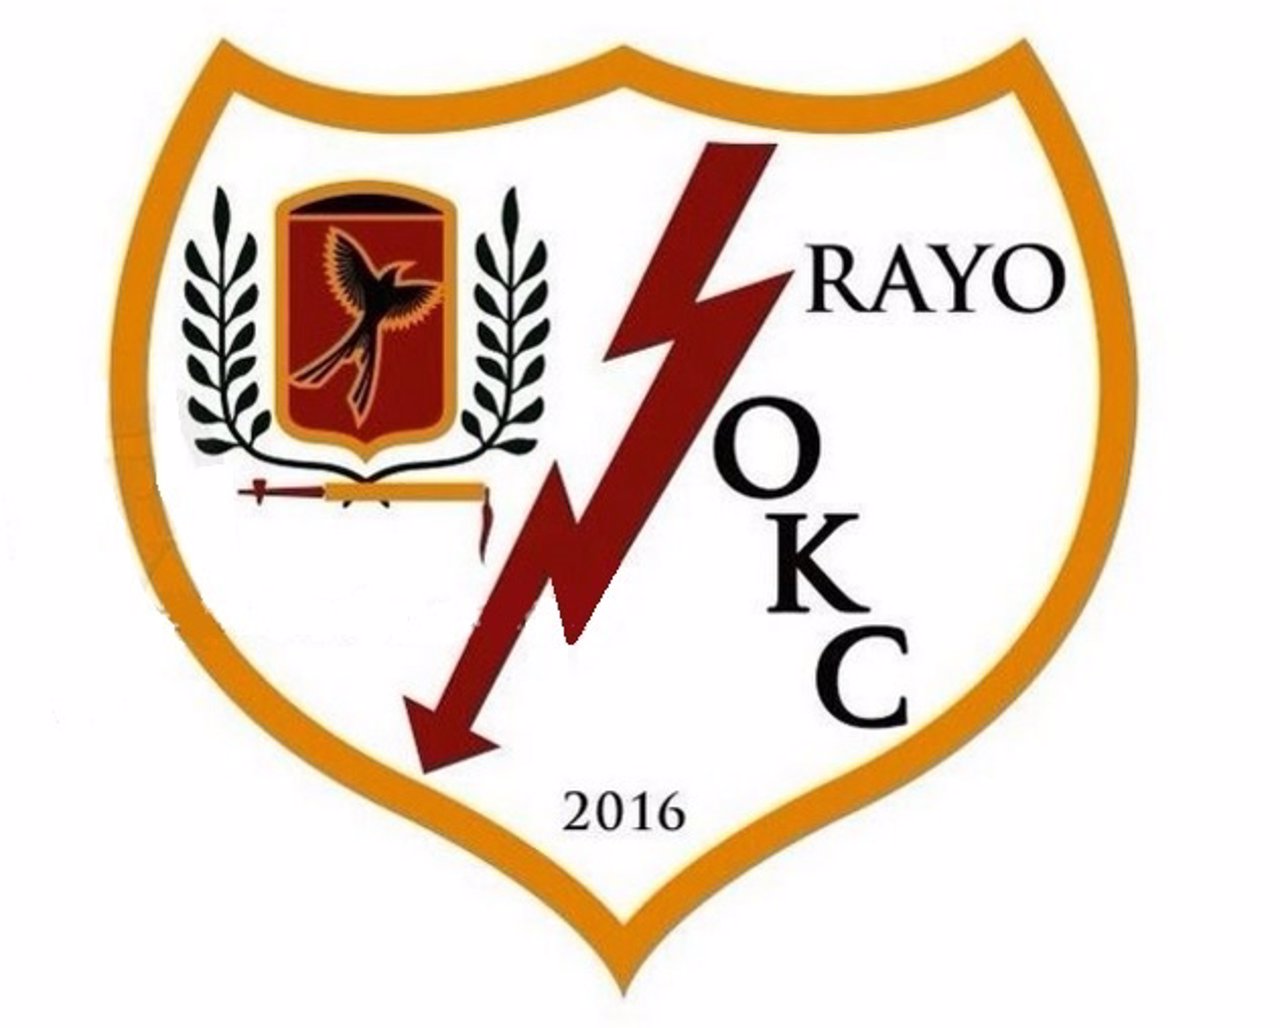 Escudo del Rayo Oklahoma City